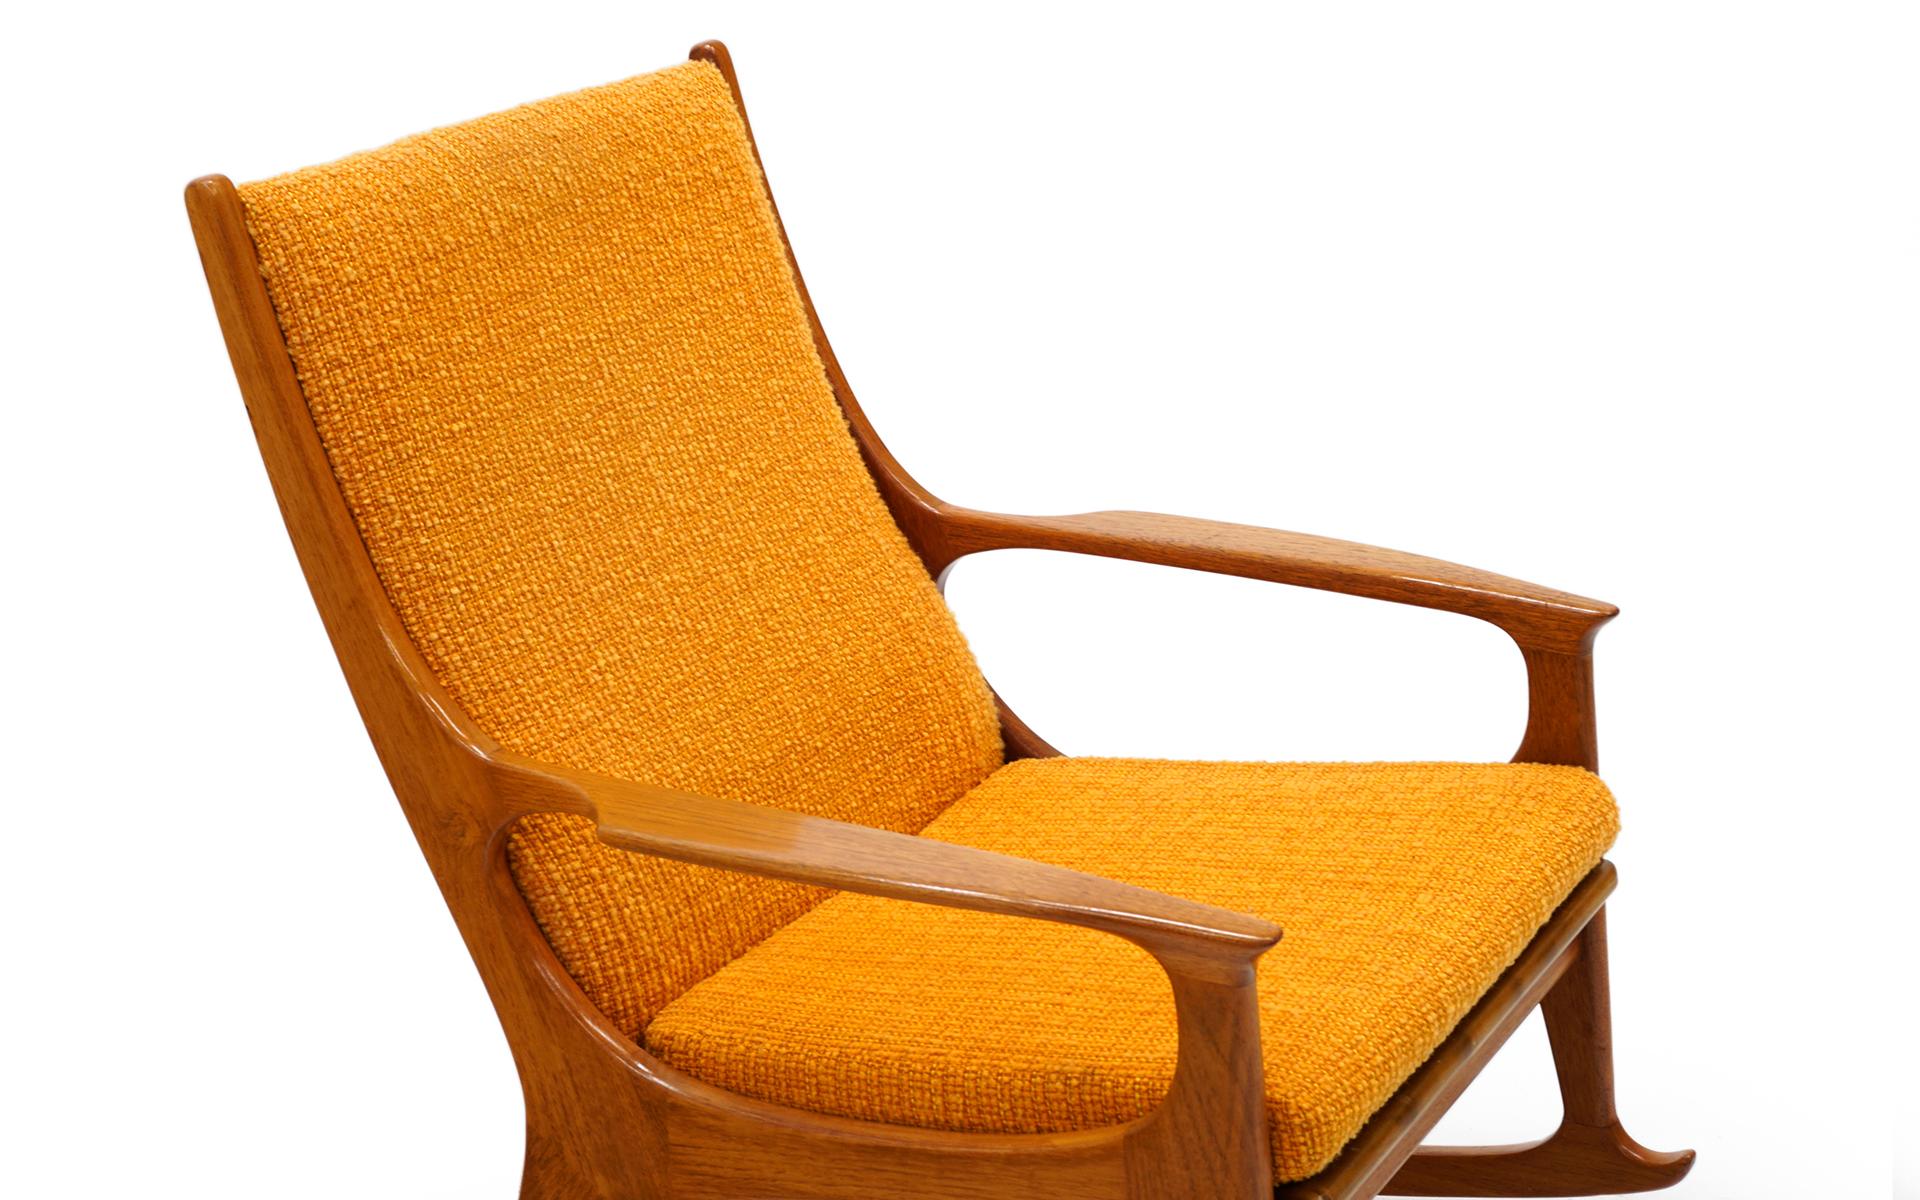 Adam Style Pair of Danish Modern High Back Lounge Chairs, One Rocker, Teak Orange Originall